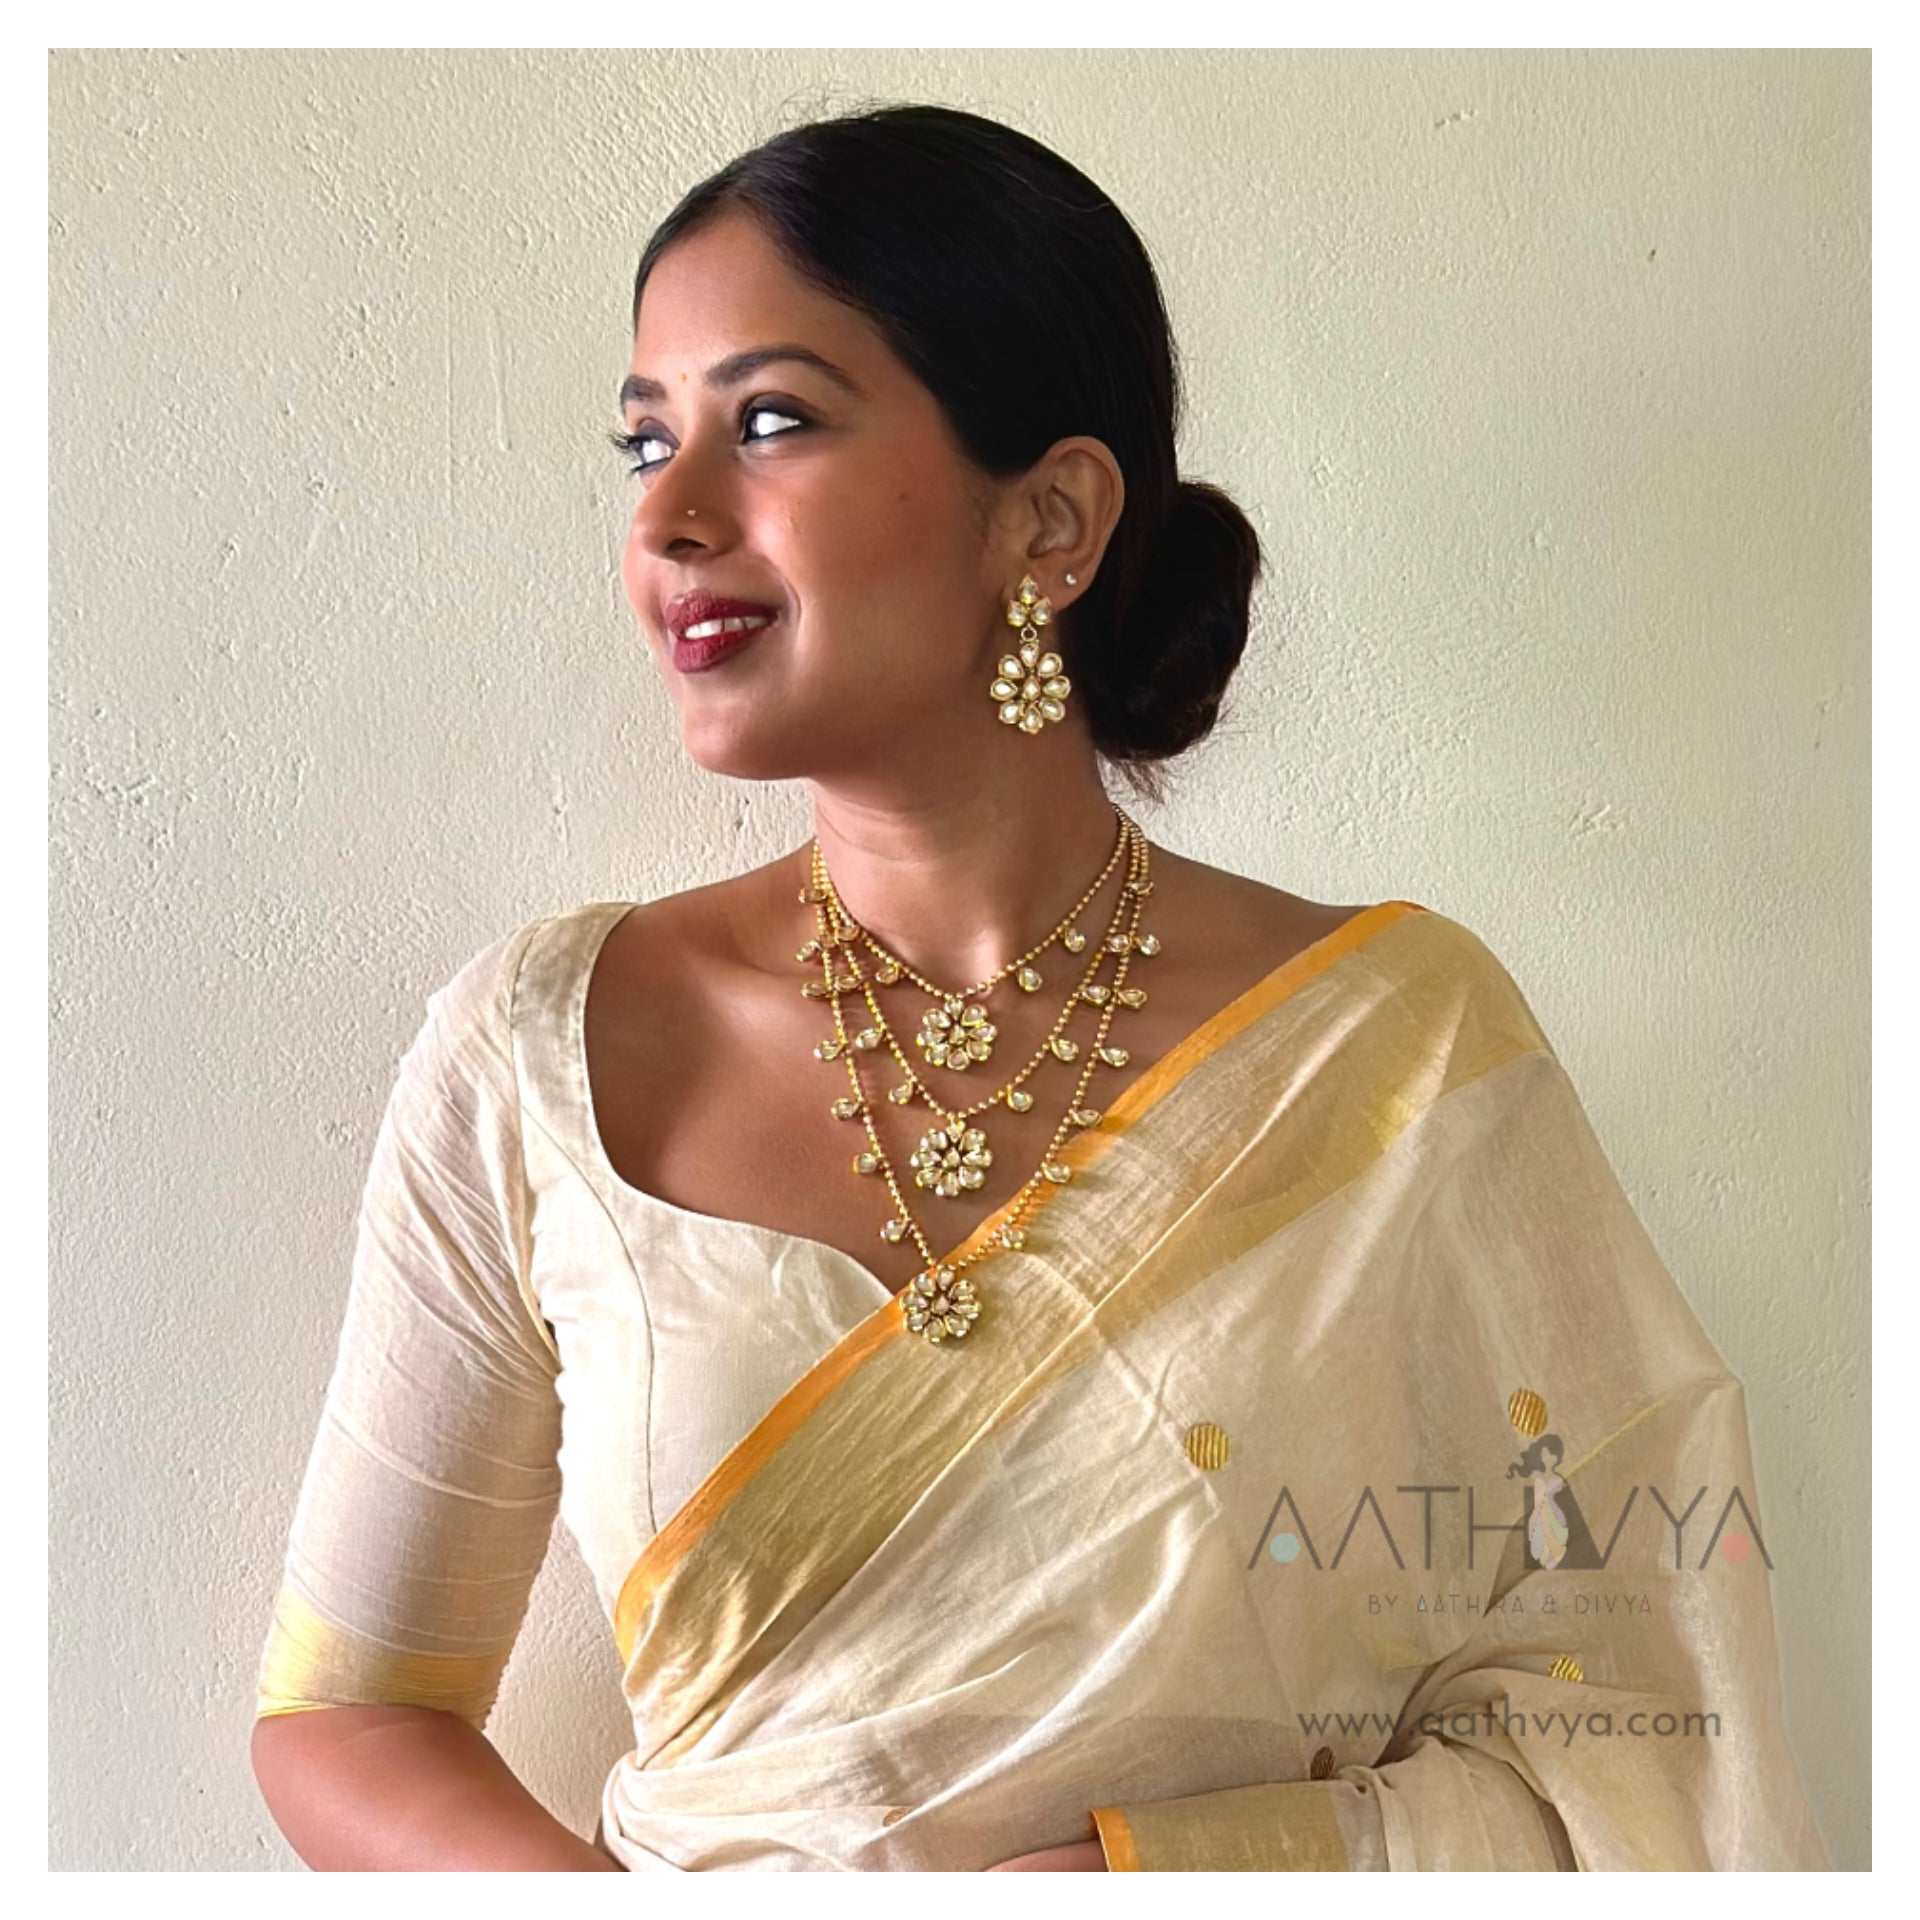 Young India Woman Model Kundan Jewelry Stock Photo 2026438382 | Shutterstock